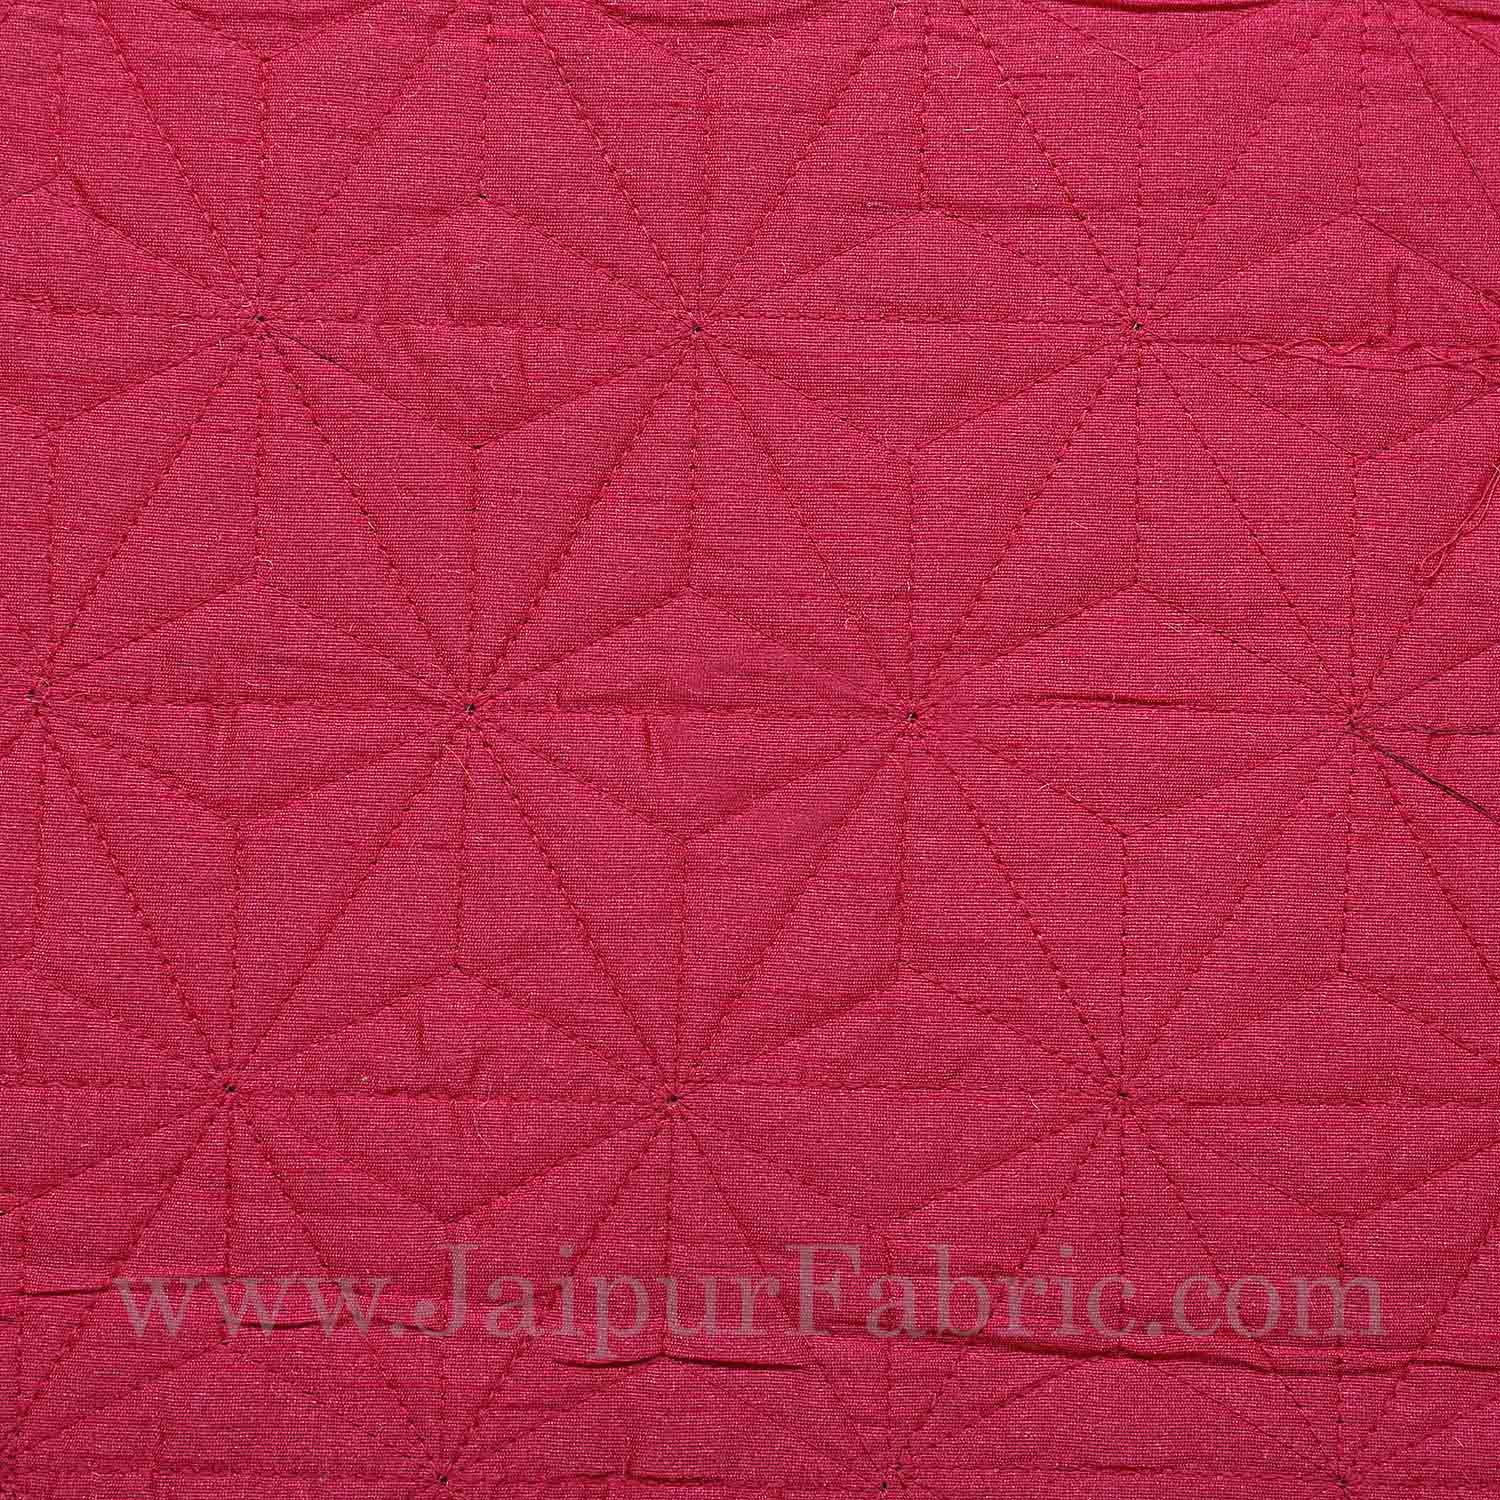 Rani Color stitched design Cushion cover